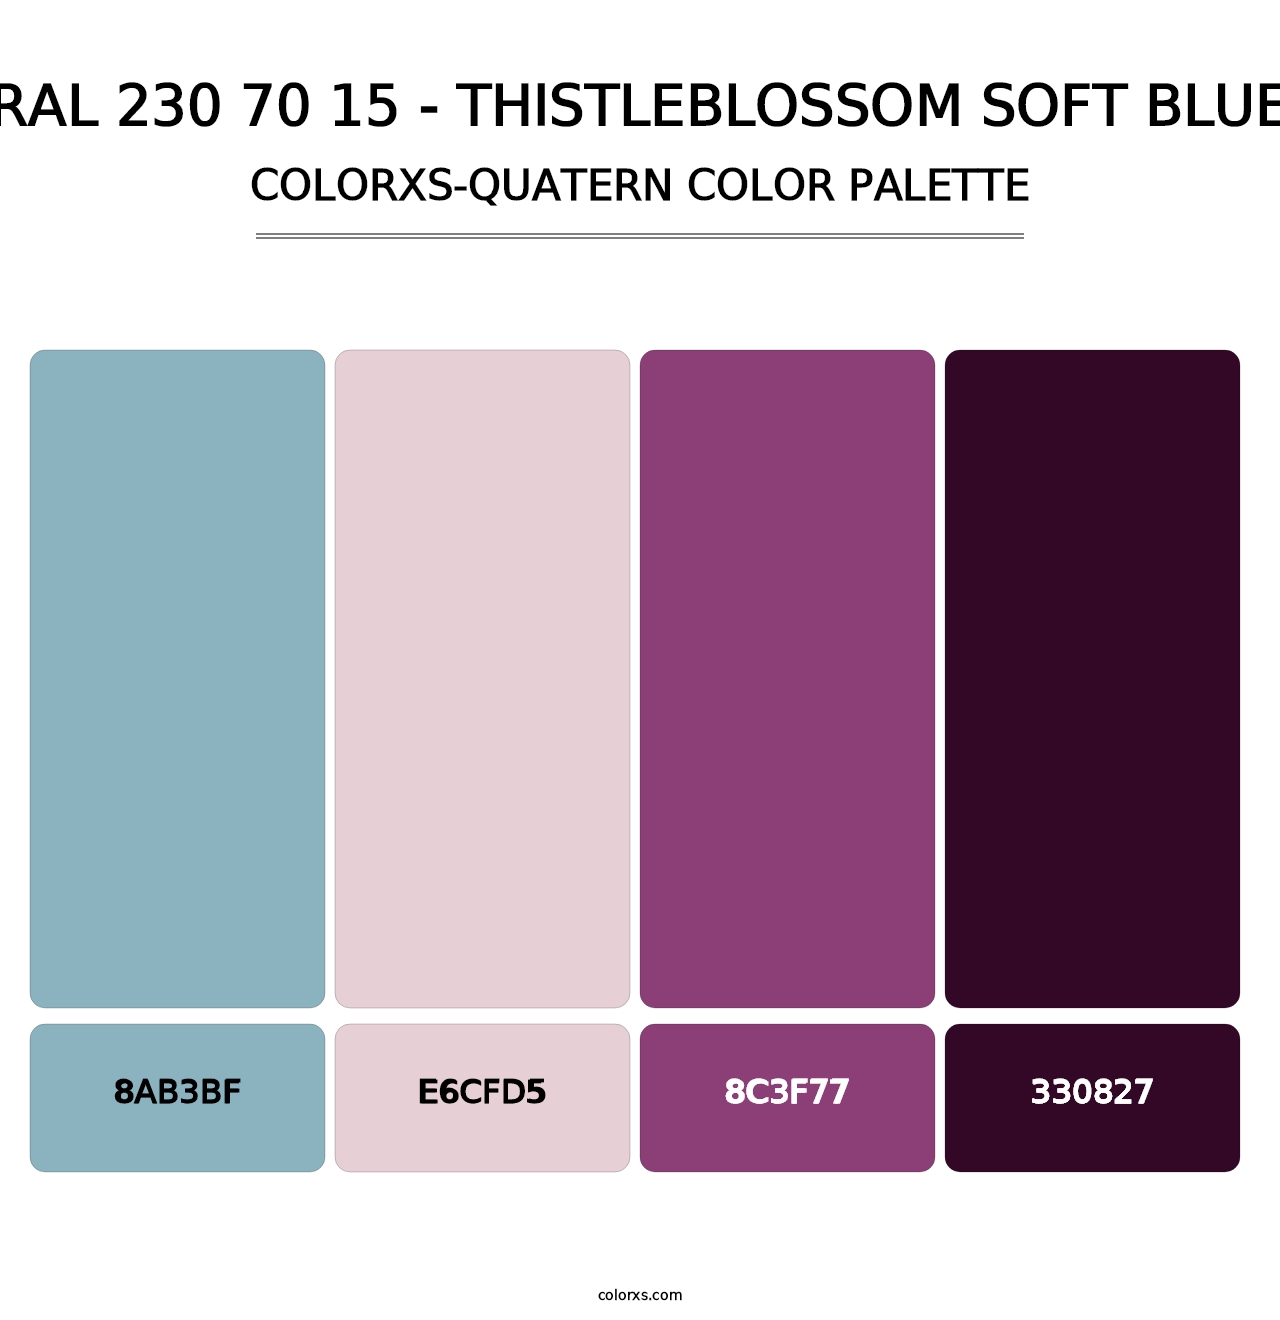 RAL 230 70 15 - Thistleblossom Soft Blue - Colorxs Quatern Palette